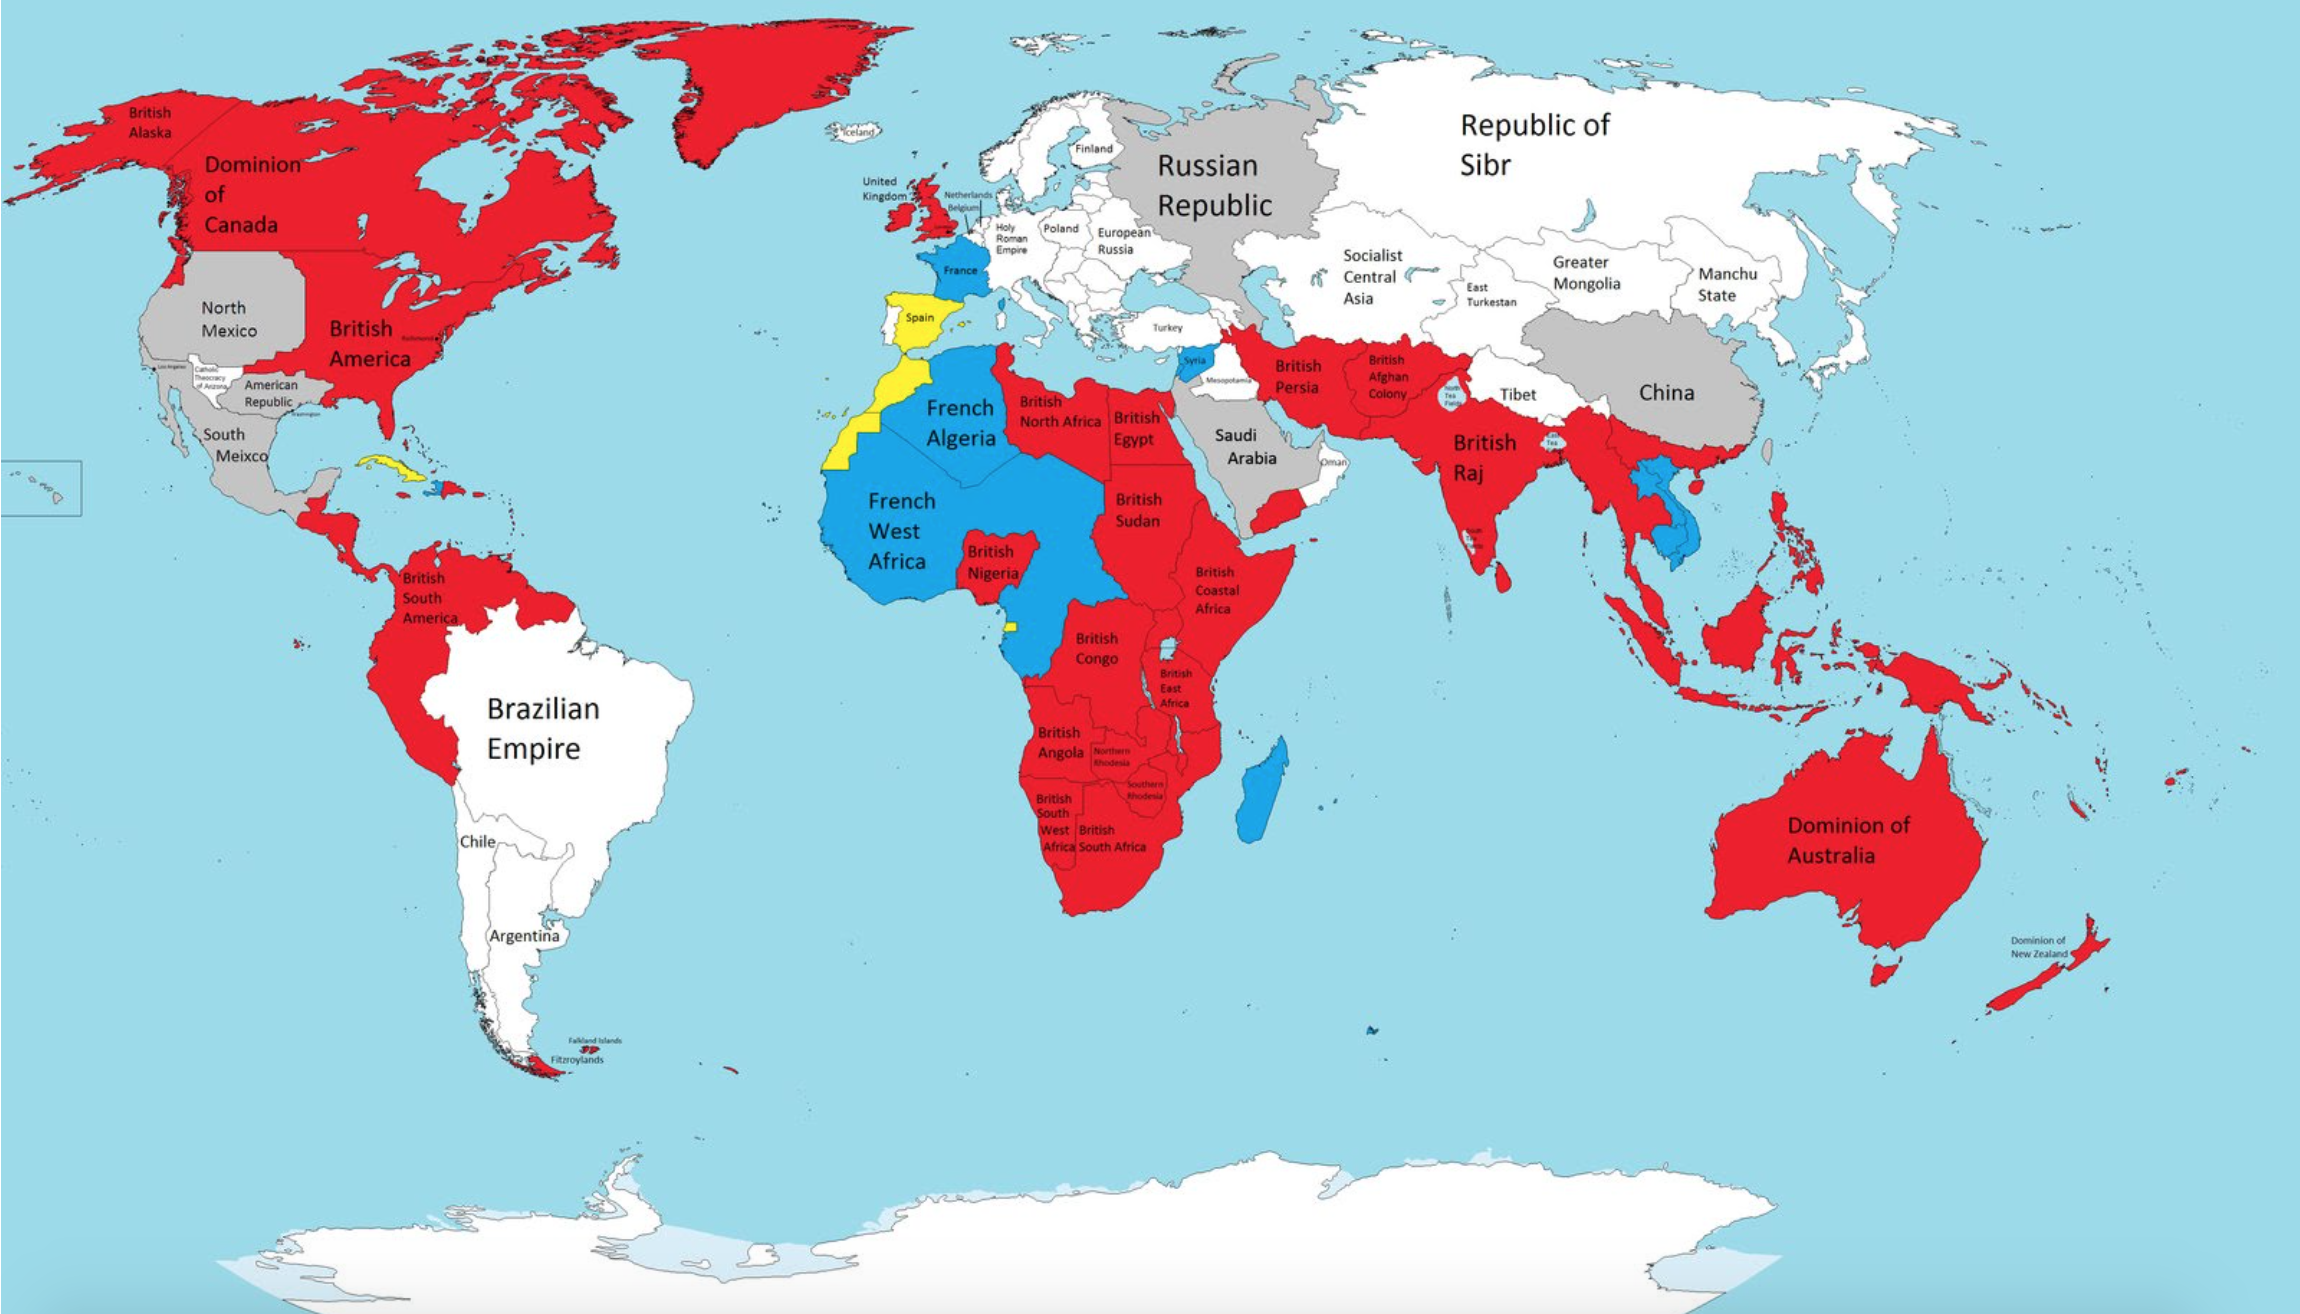 It this part of the country. Колонии британской империи на карте. Британская Империя 1900. Британская Империя в 1900 году. Колонии британской империи в конце 19 века.